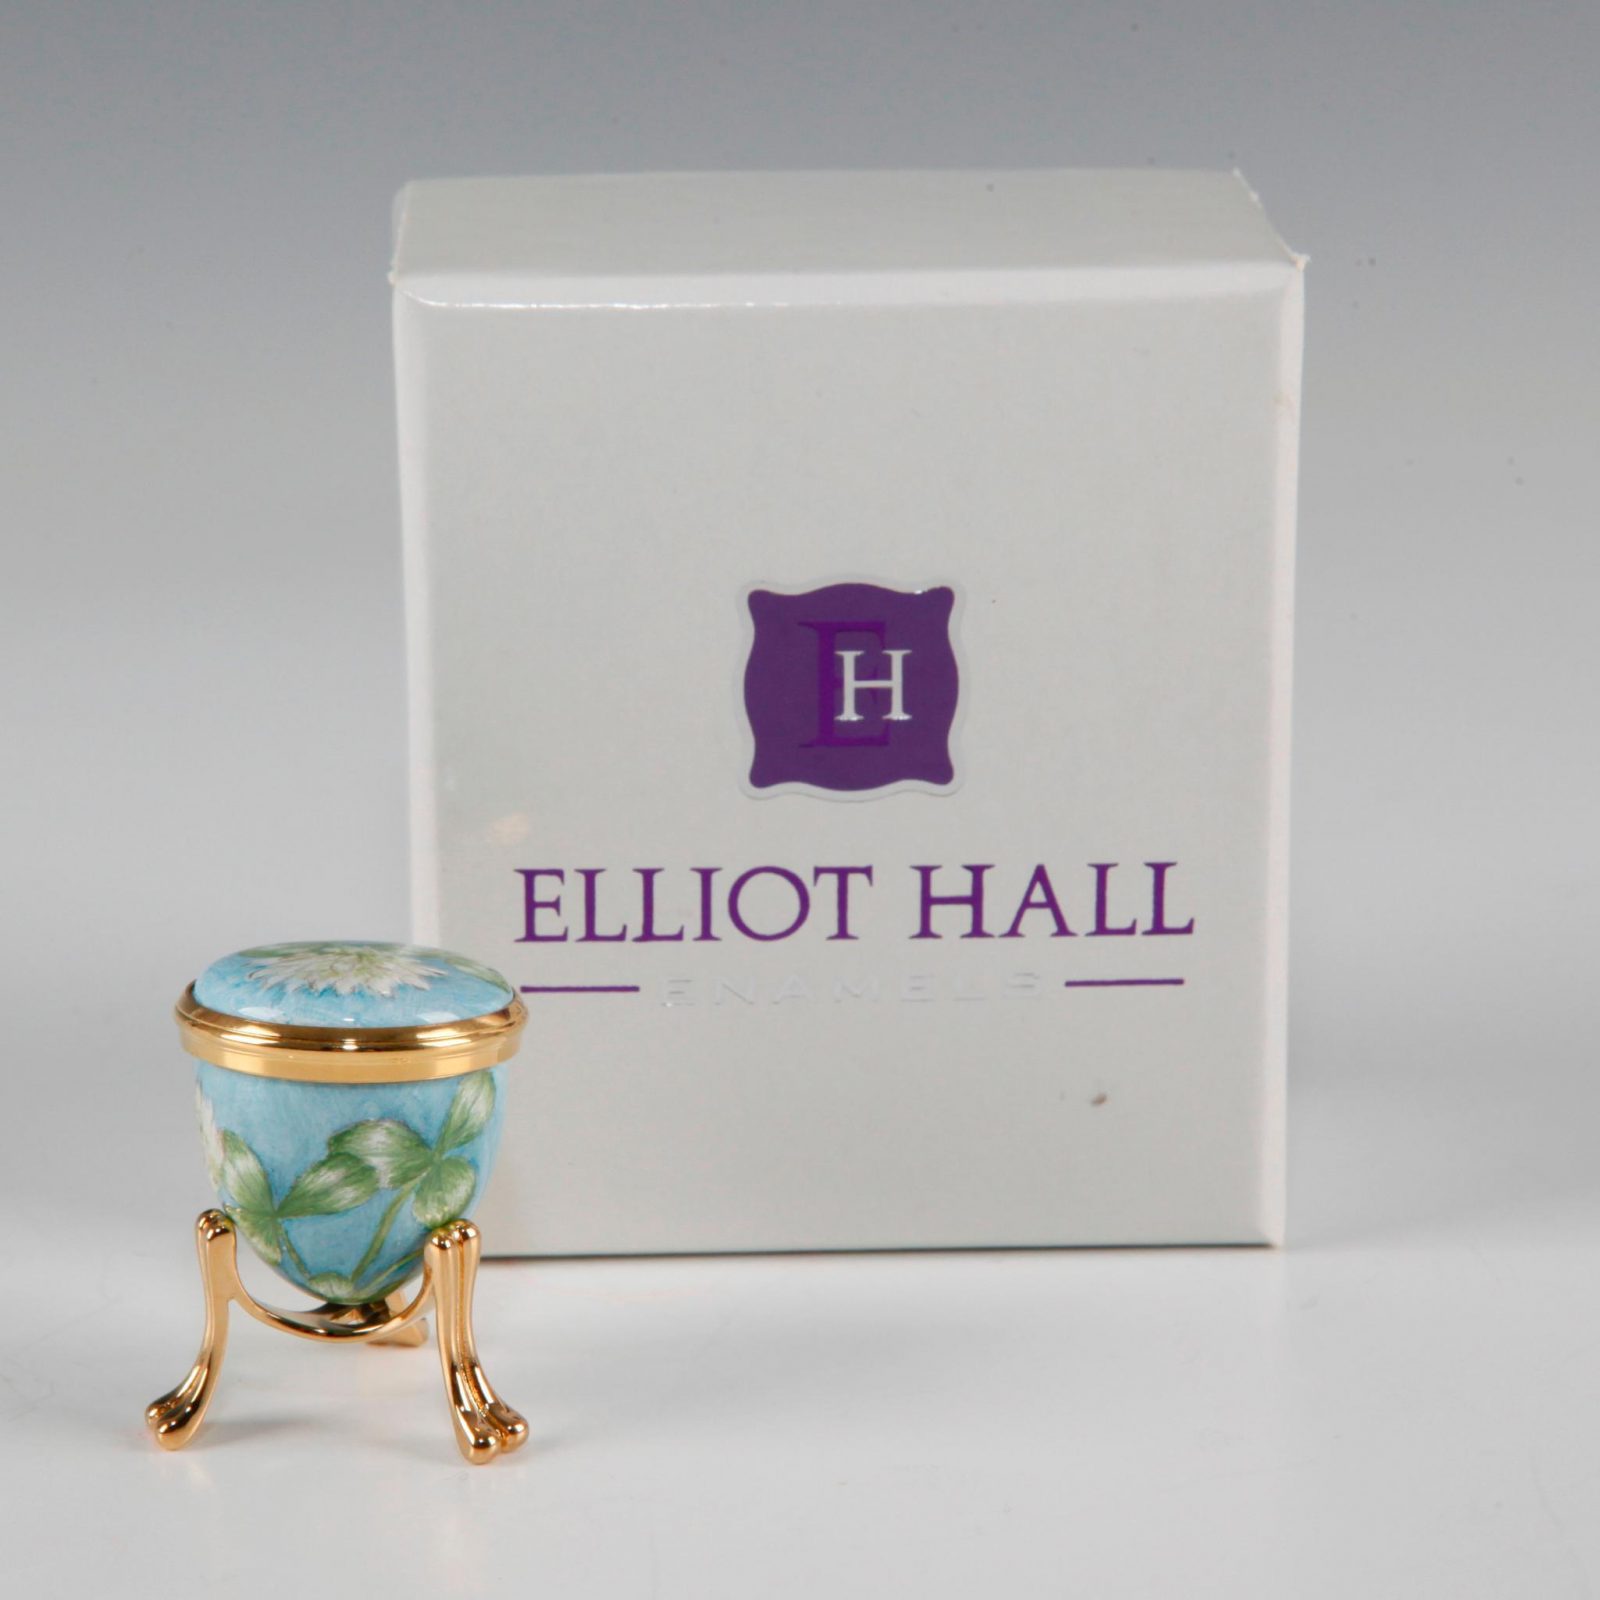 Elliot Hall Enamel Box Clovers